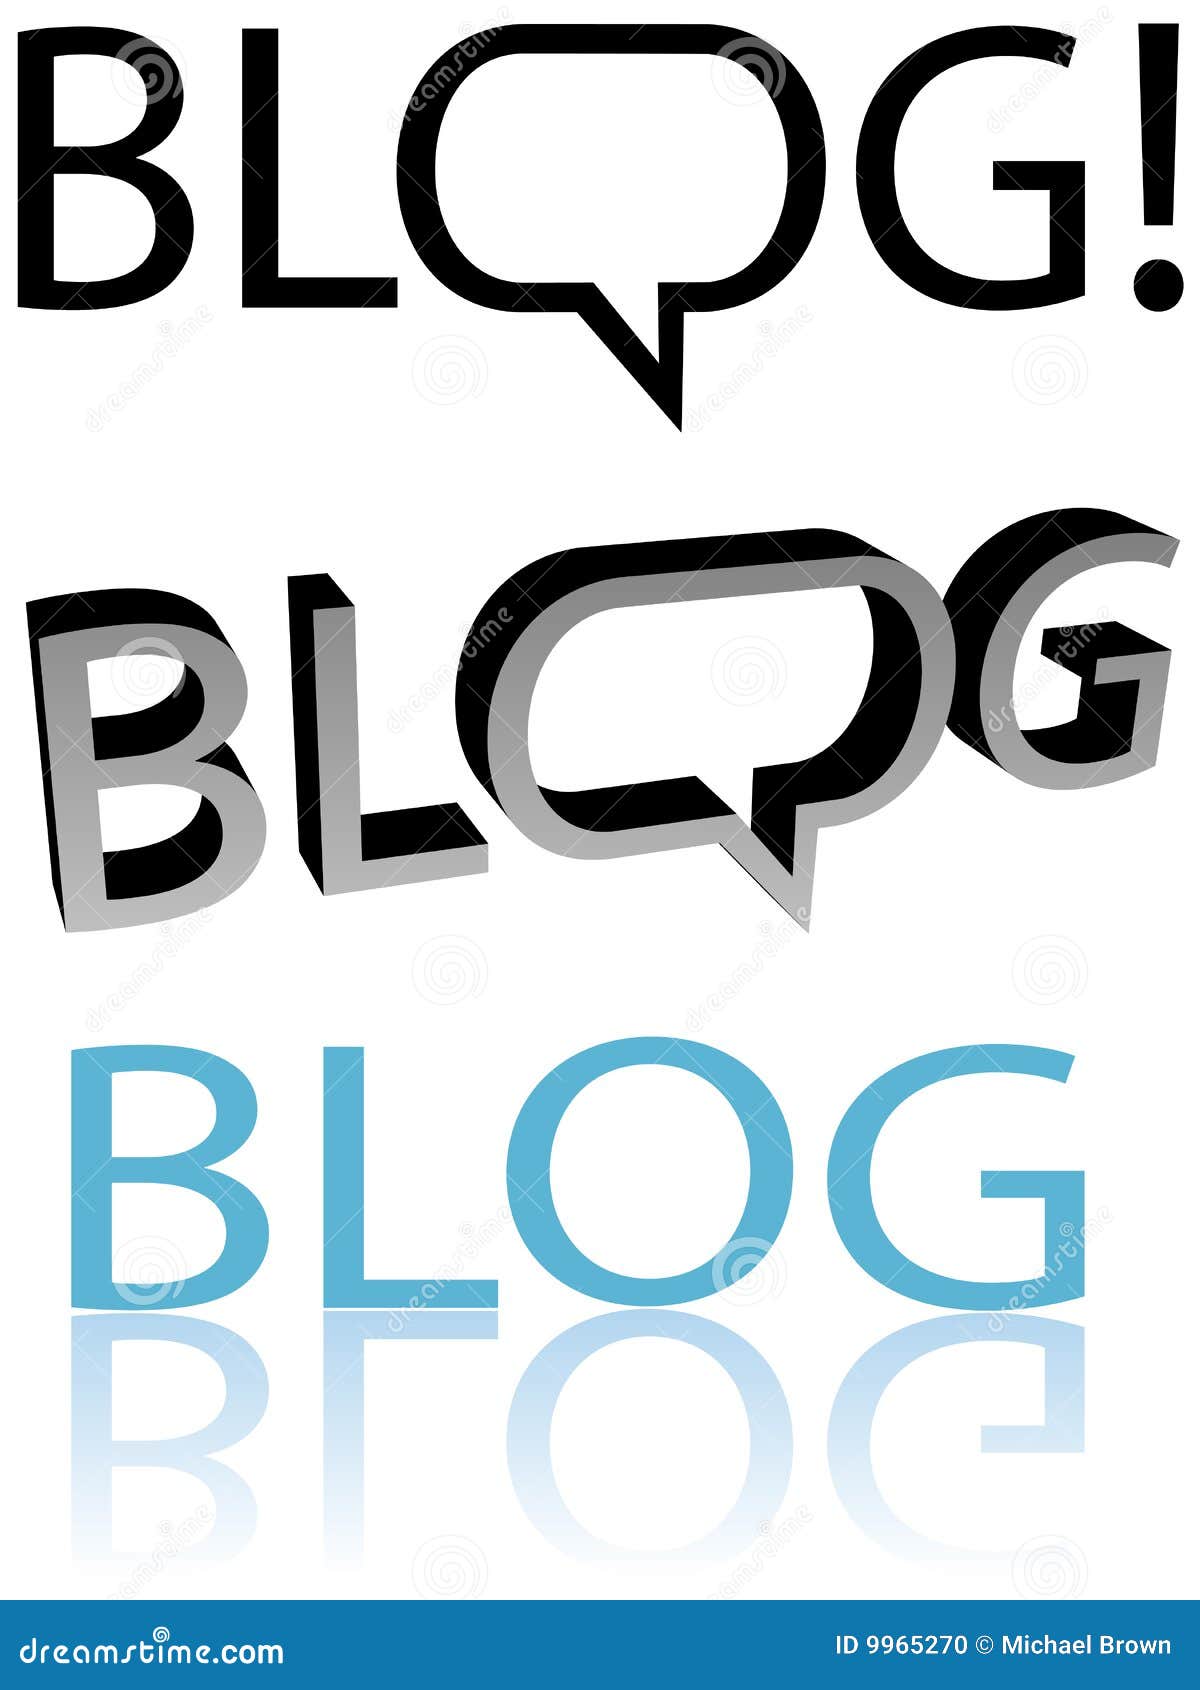 blog! blogger speech bubble balloon copyspace